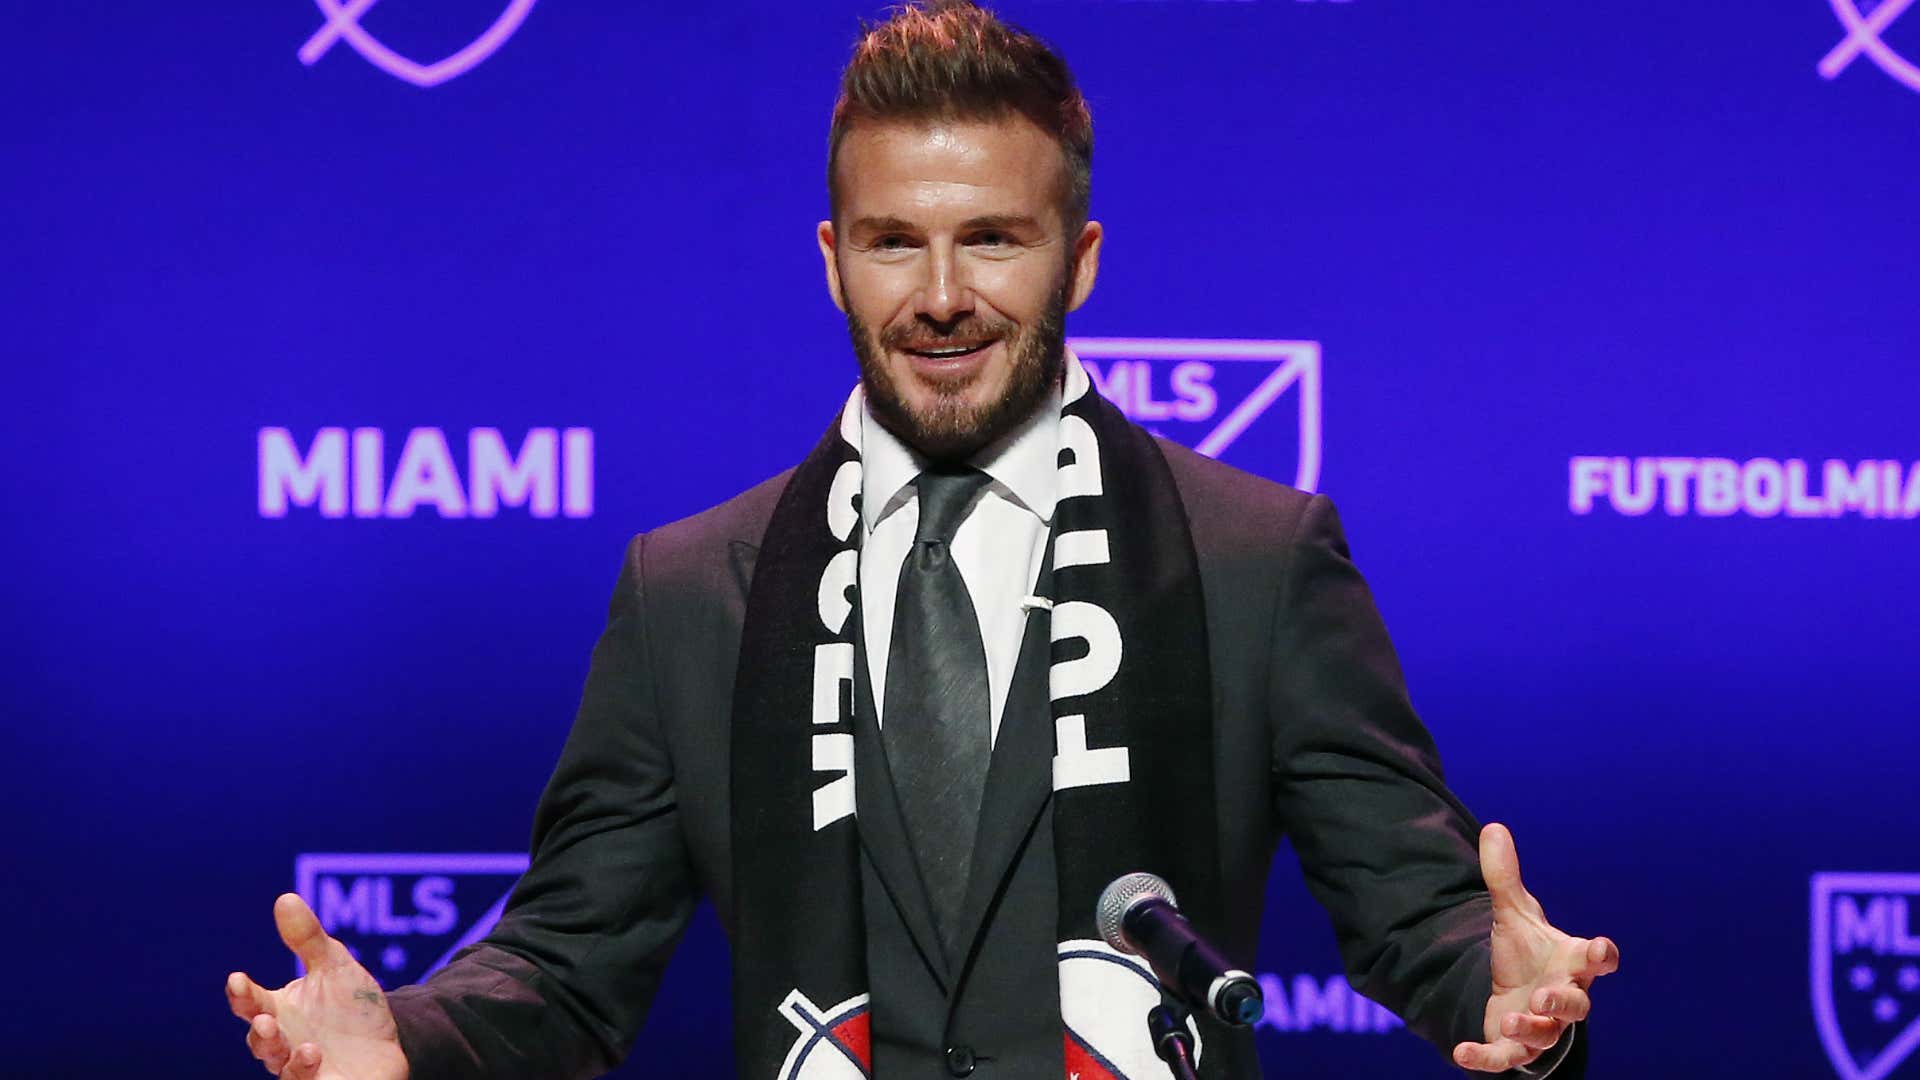 David Beckham MLS Miami 01292018